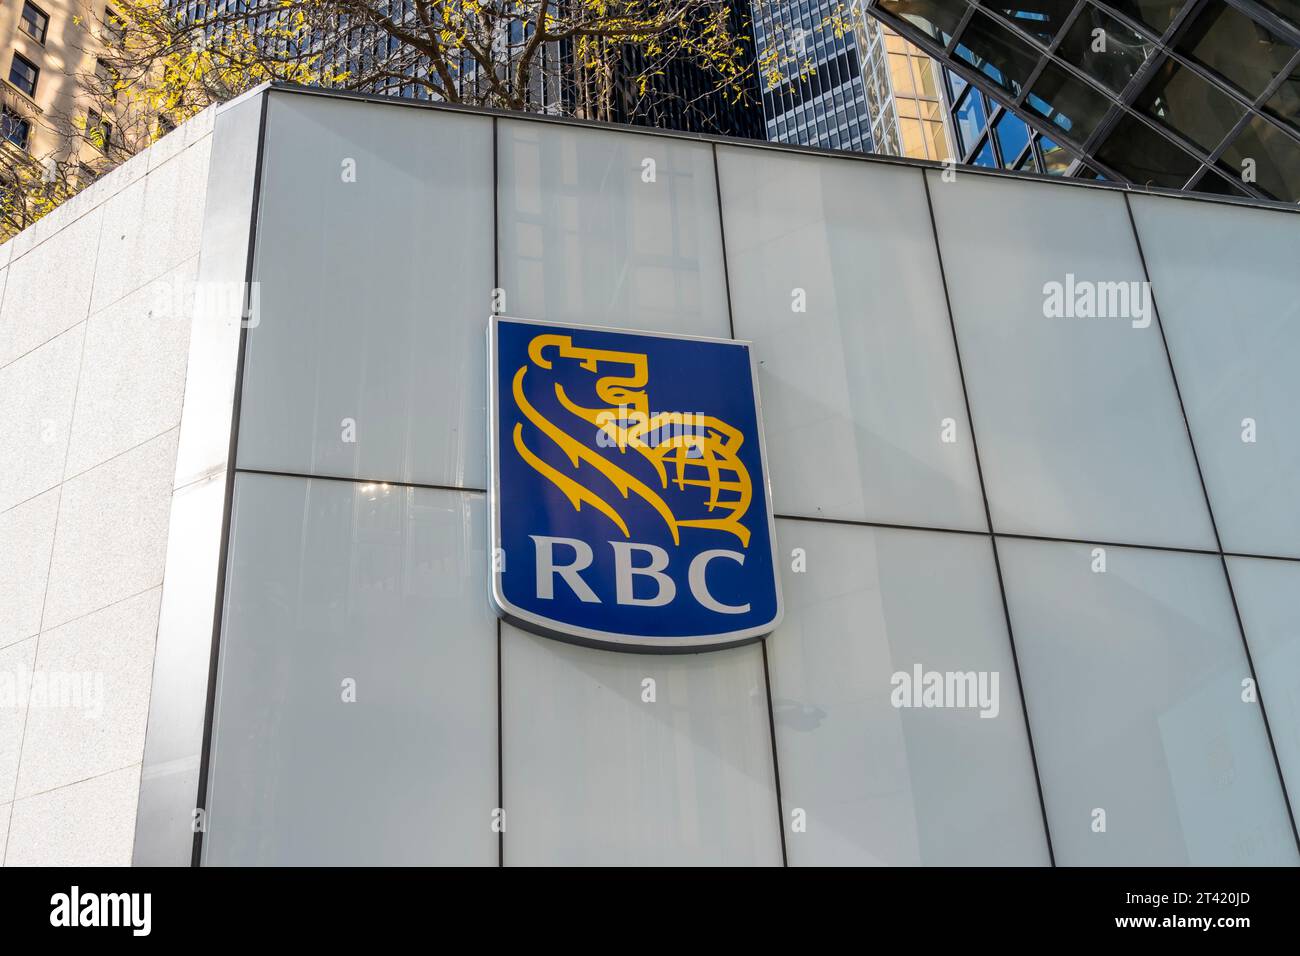 RBC (Royal Bank of Canada) logo on the building in Toronto, Ontario, Canada Stock Photo